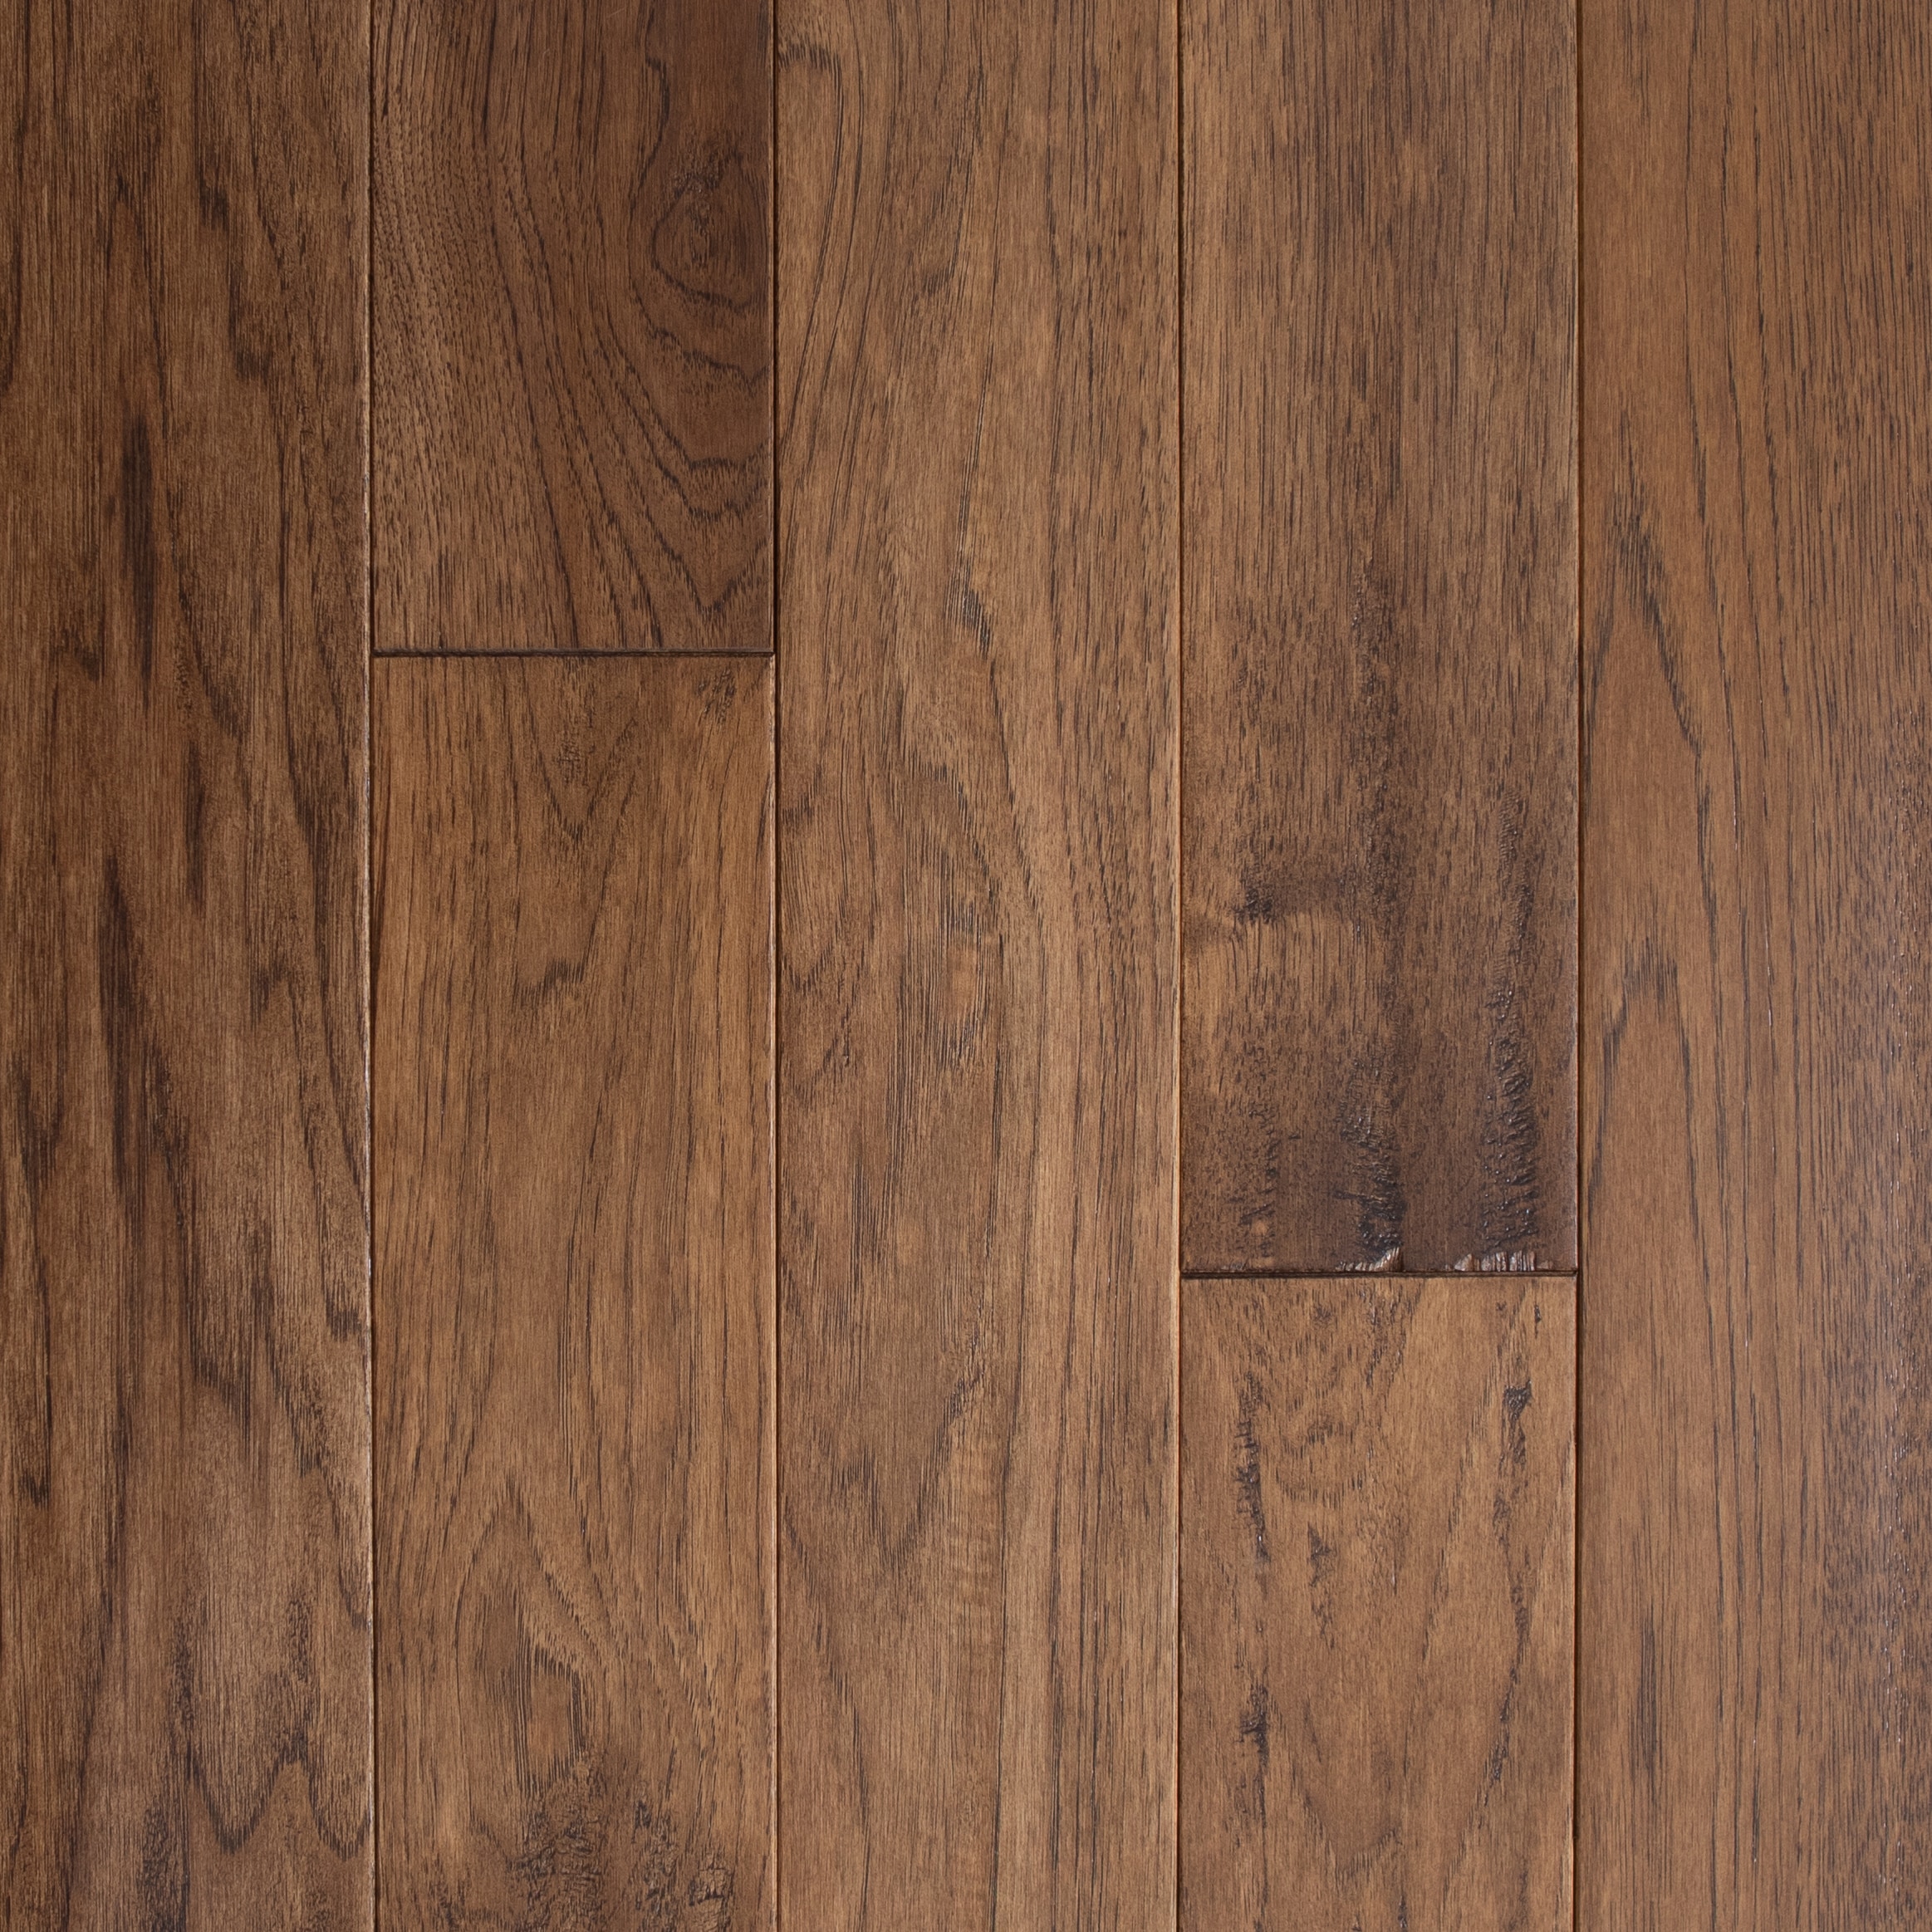 Green Leaf Hardwood Flooring At Com, Antique Maple Dusk Laminate Flooring